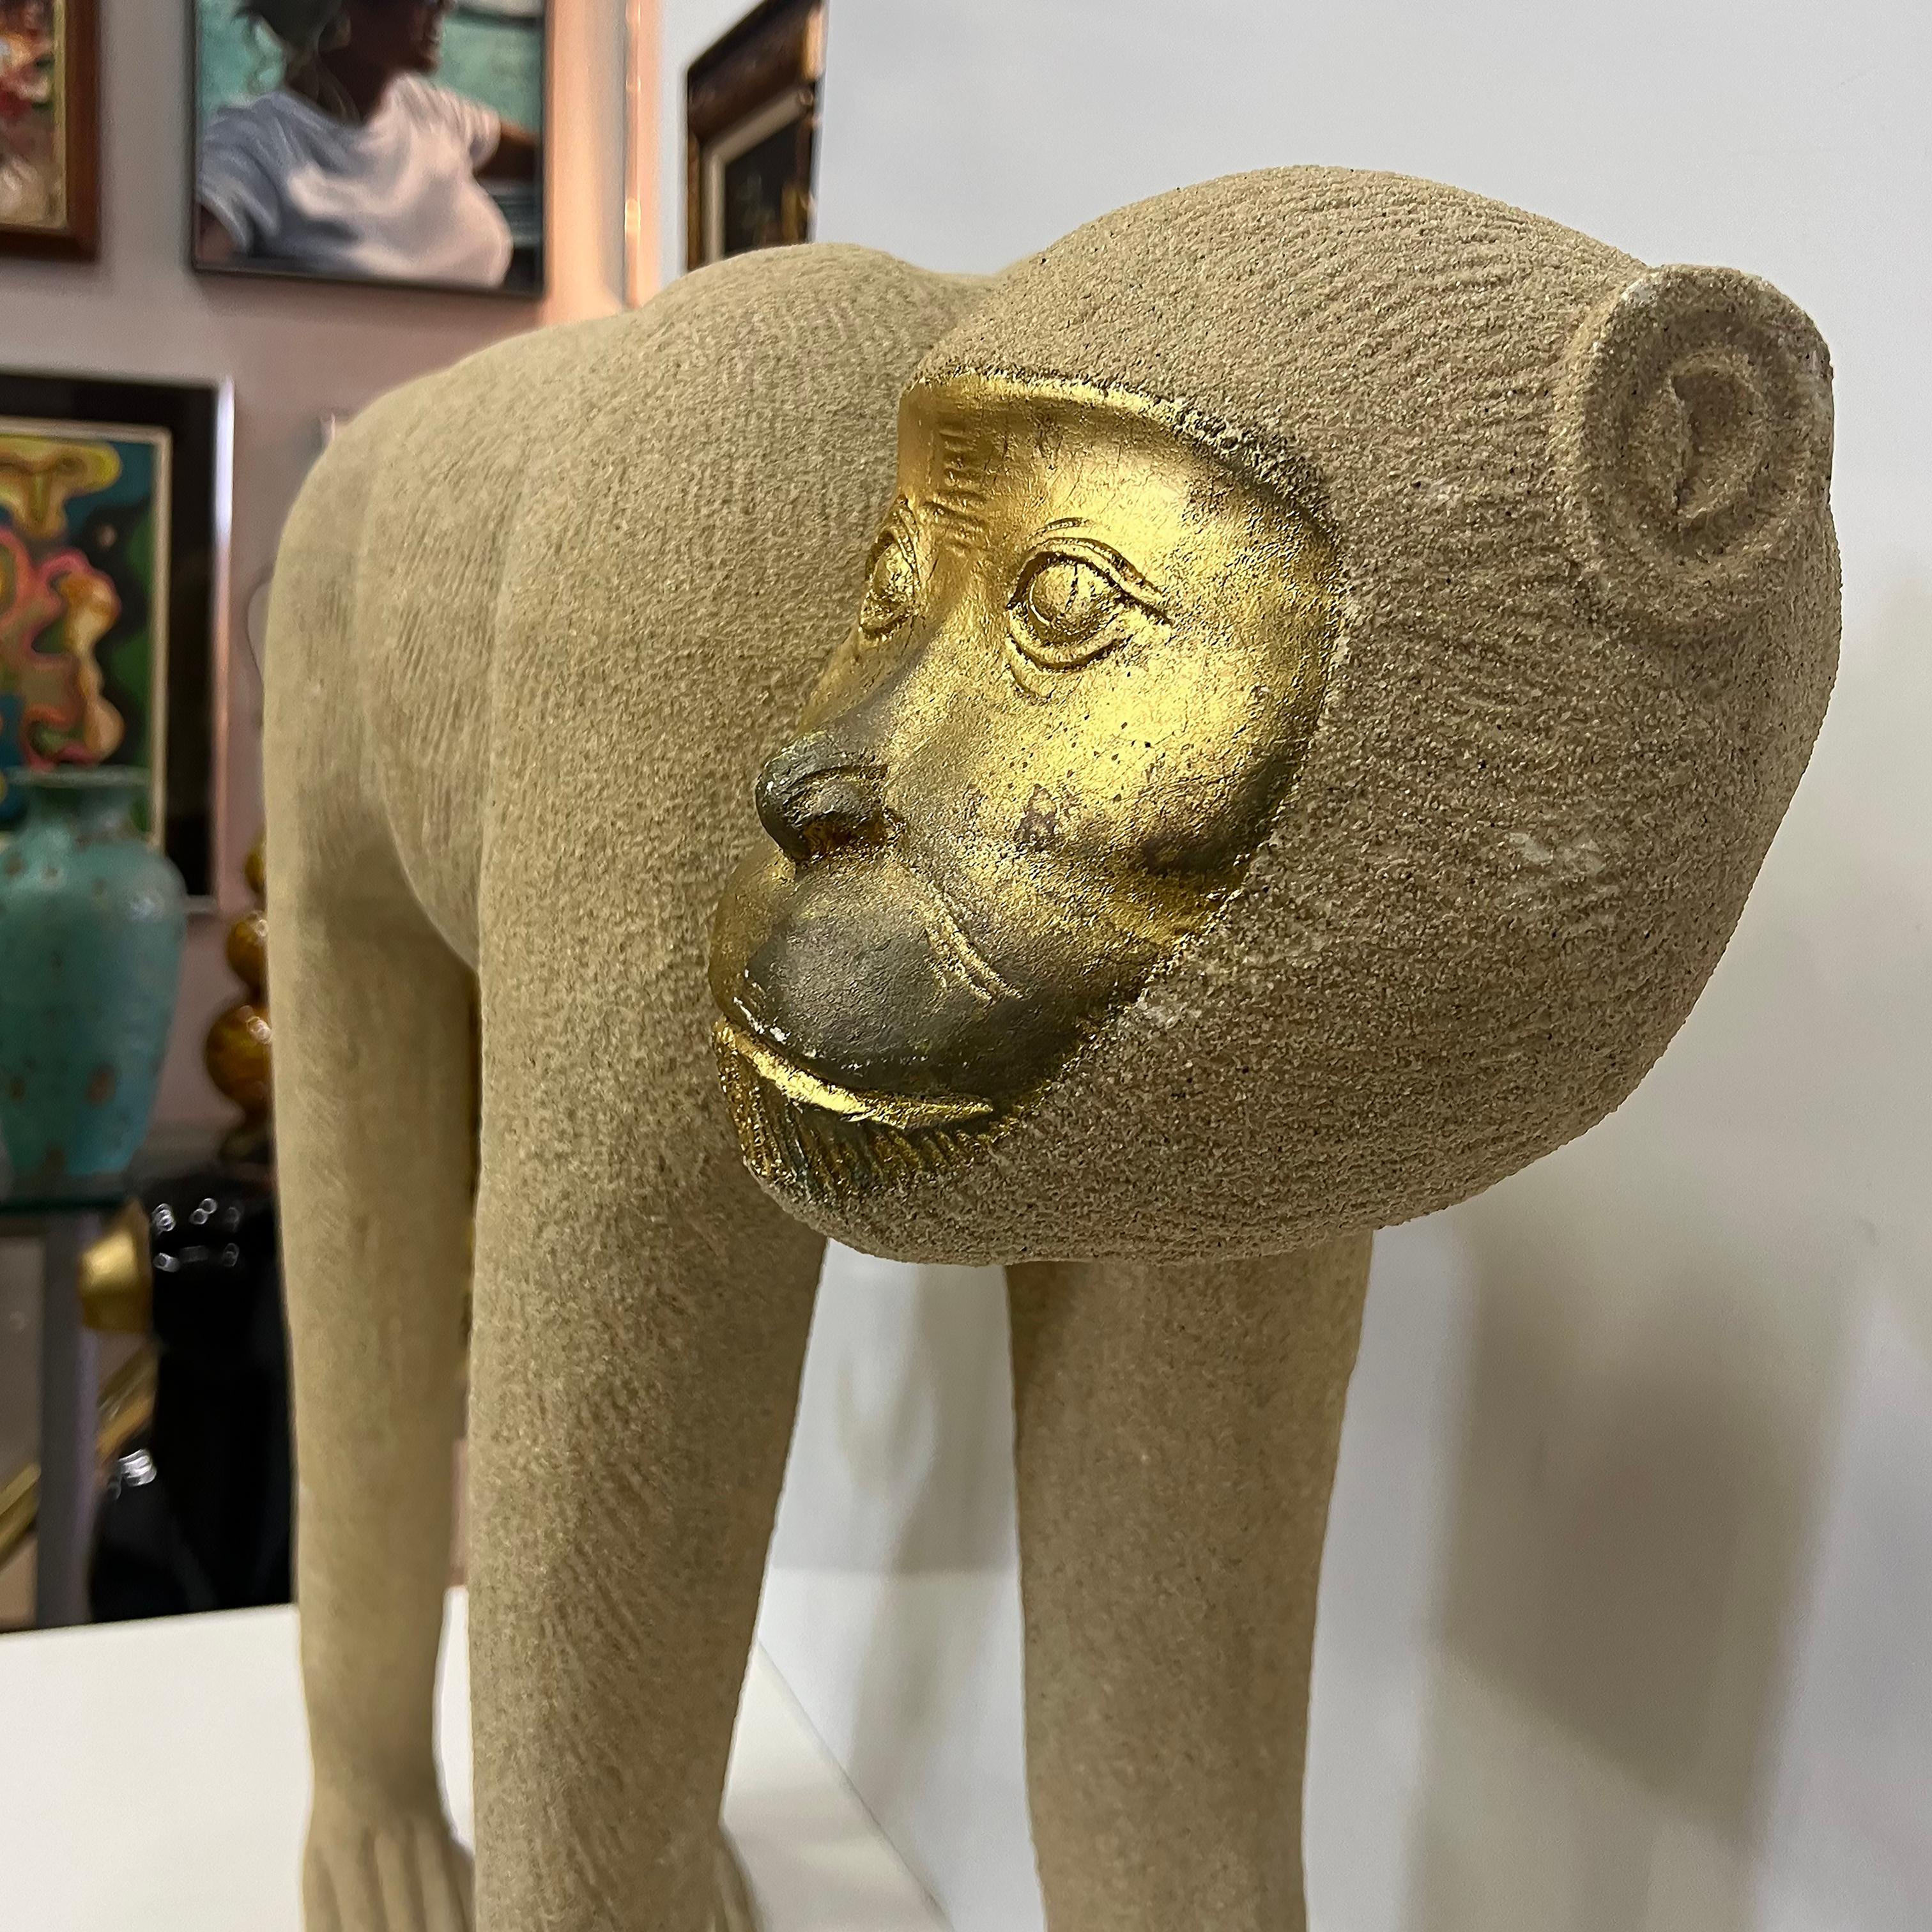 Life Size 1980s Pop-Art Monkey Sculpture With Gilt Accents For Sale 1